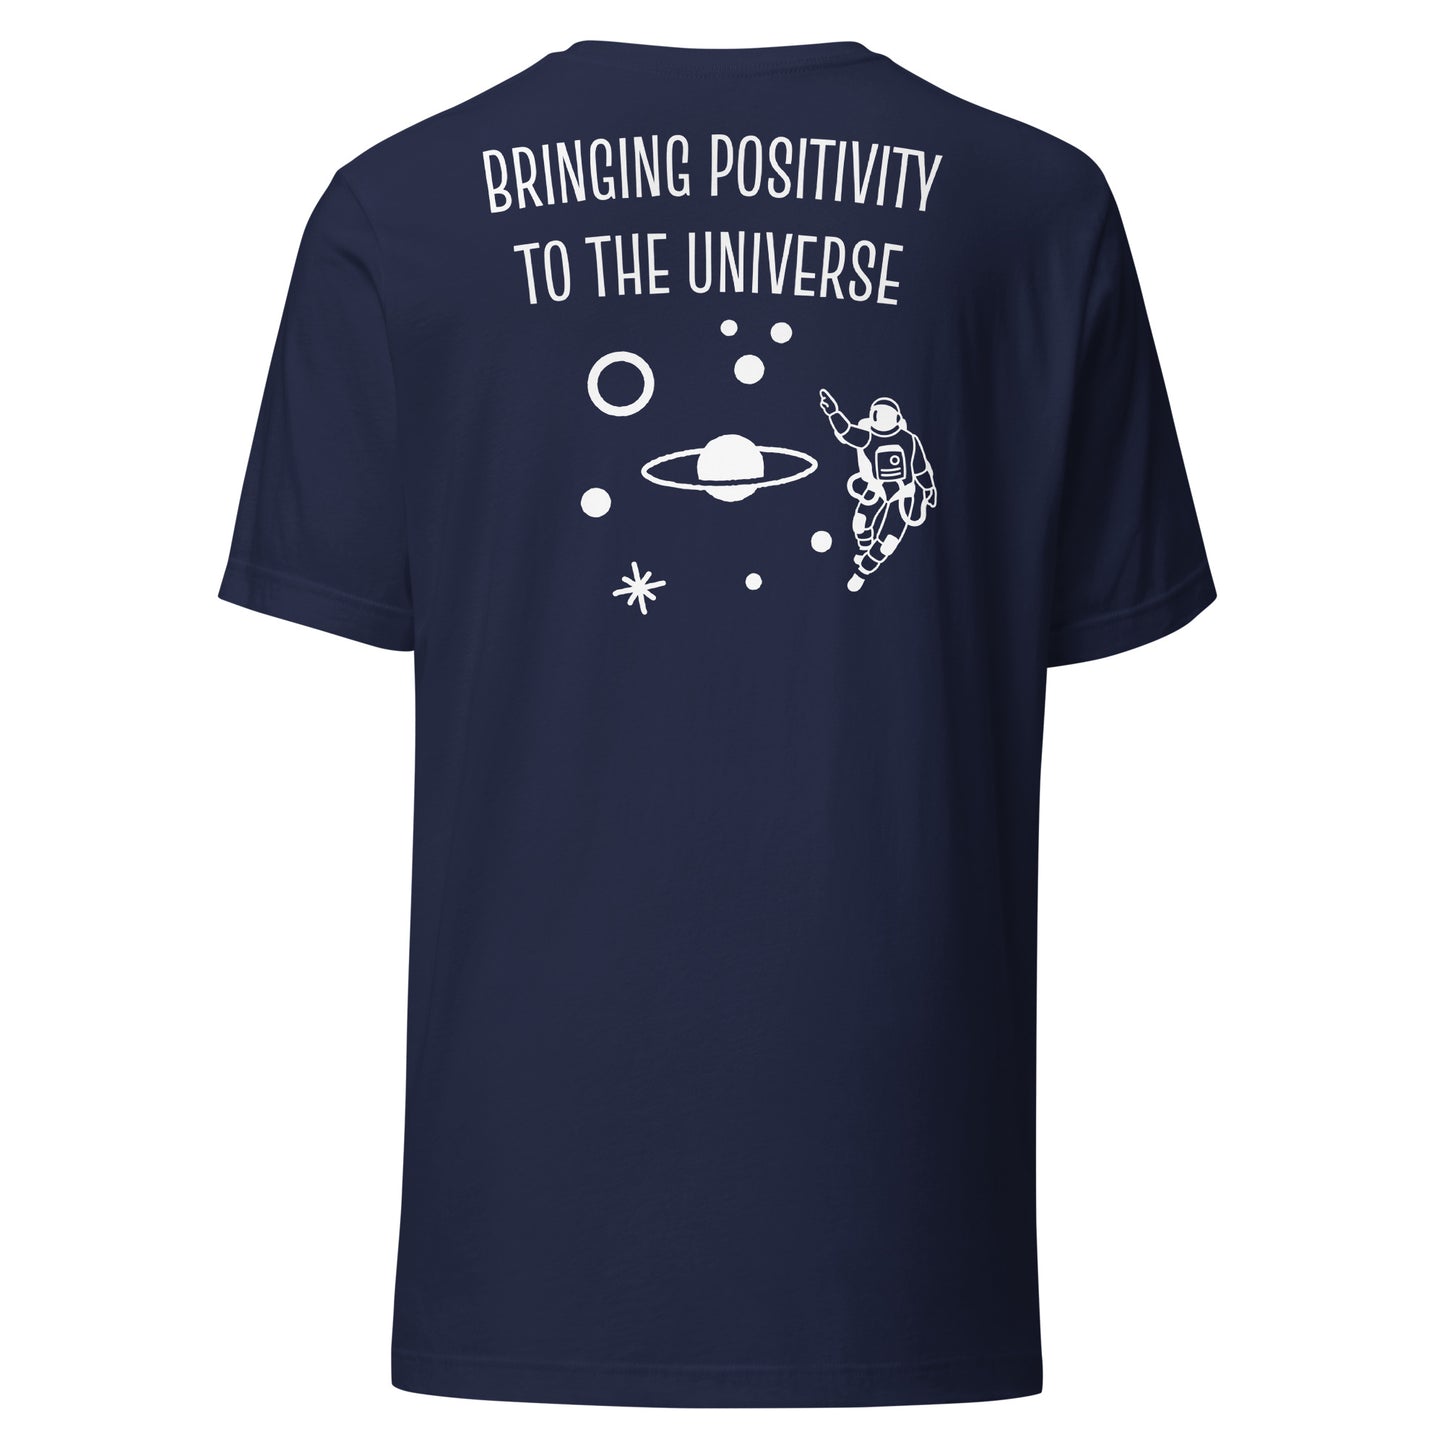 U.C Logo Bringing Positivity t-shirt